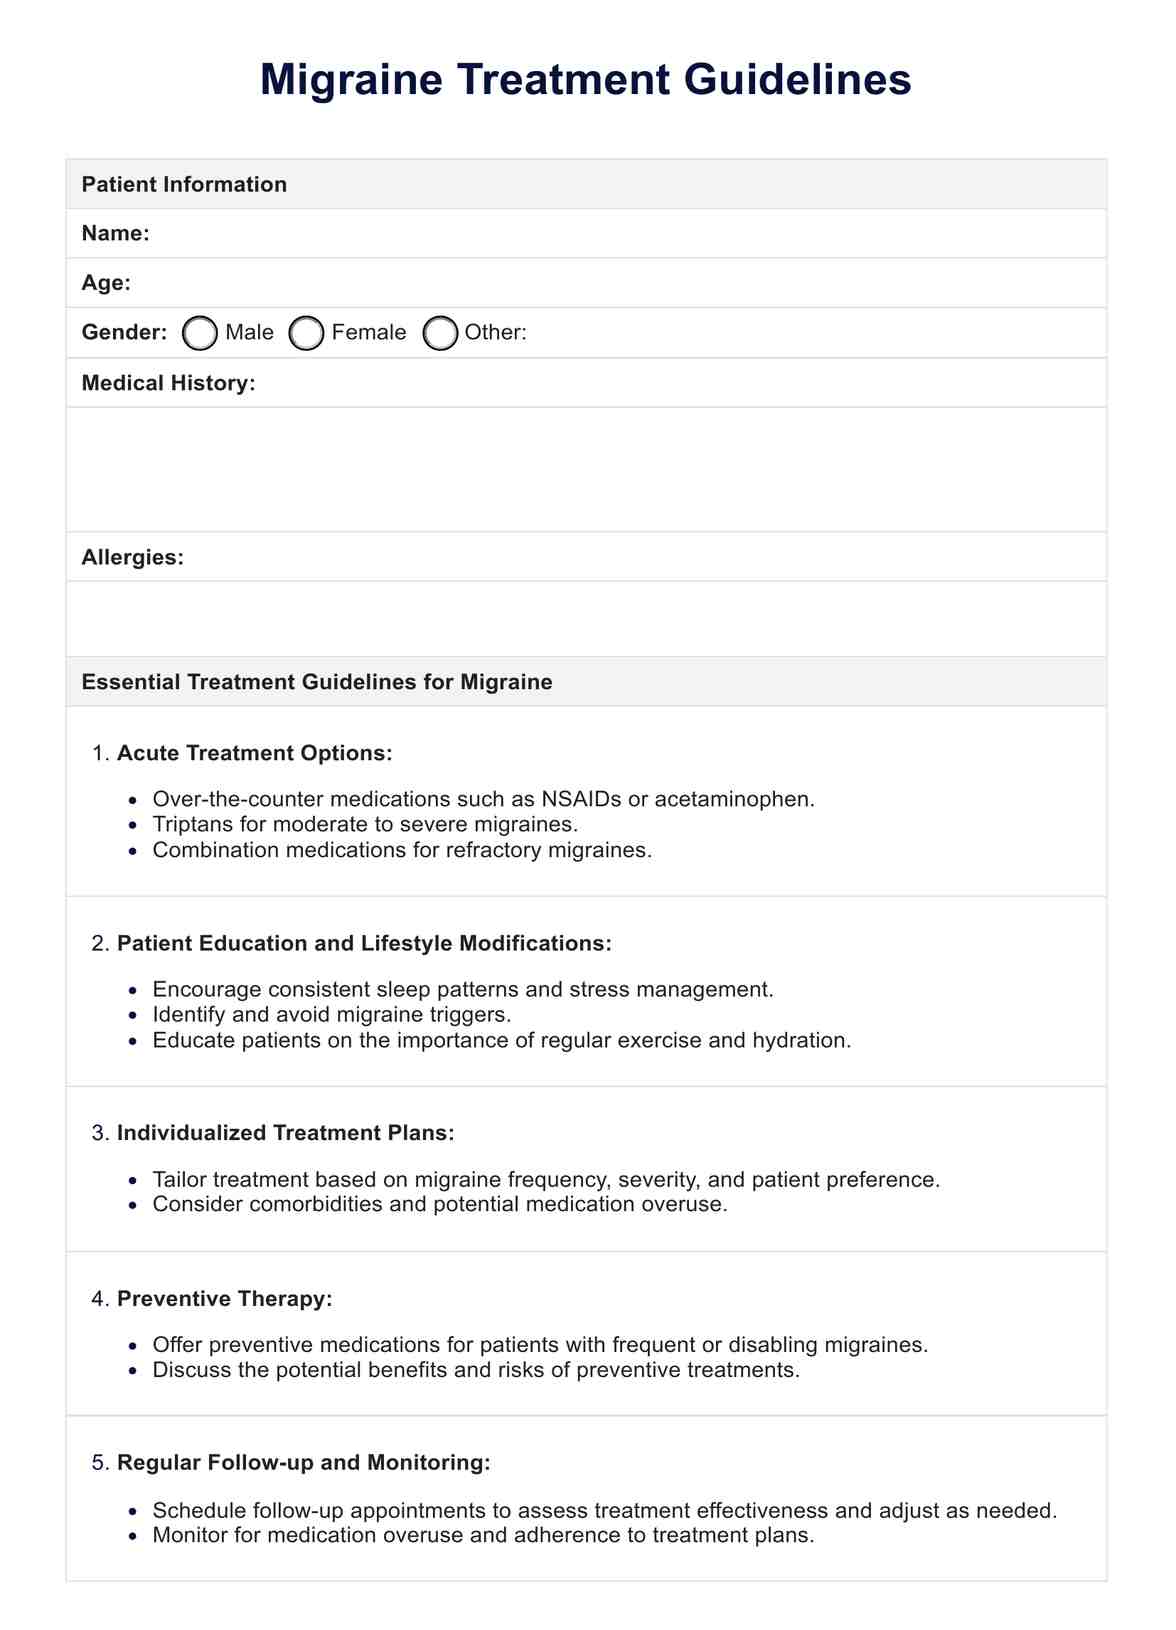 Migraine Treatment Guidelines PDF Example